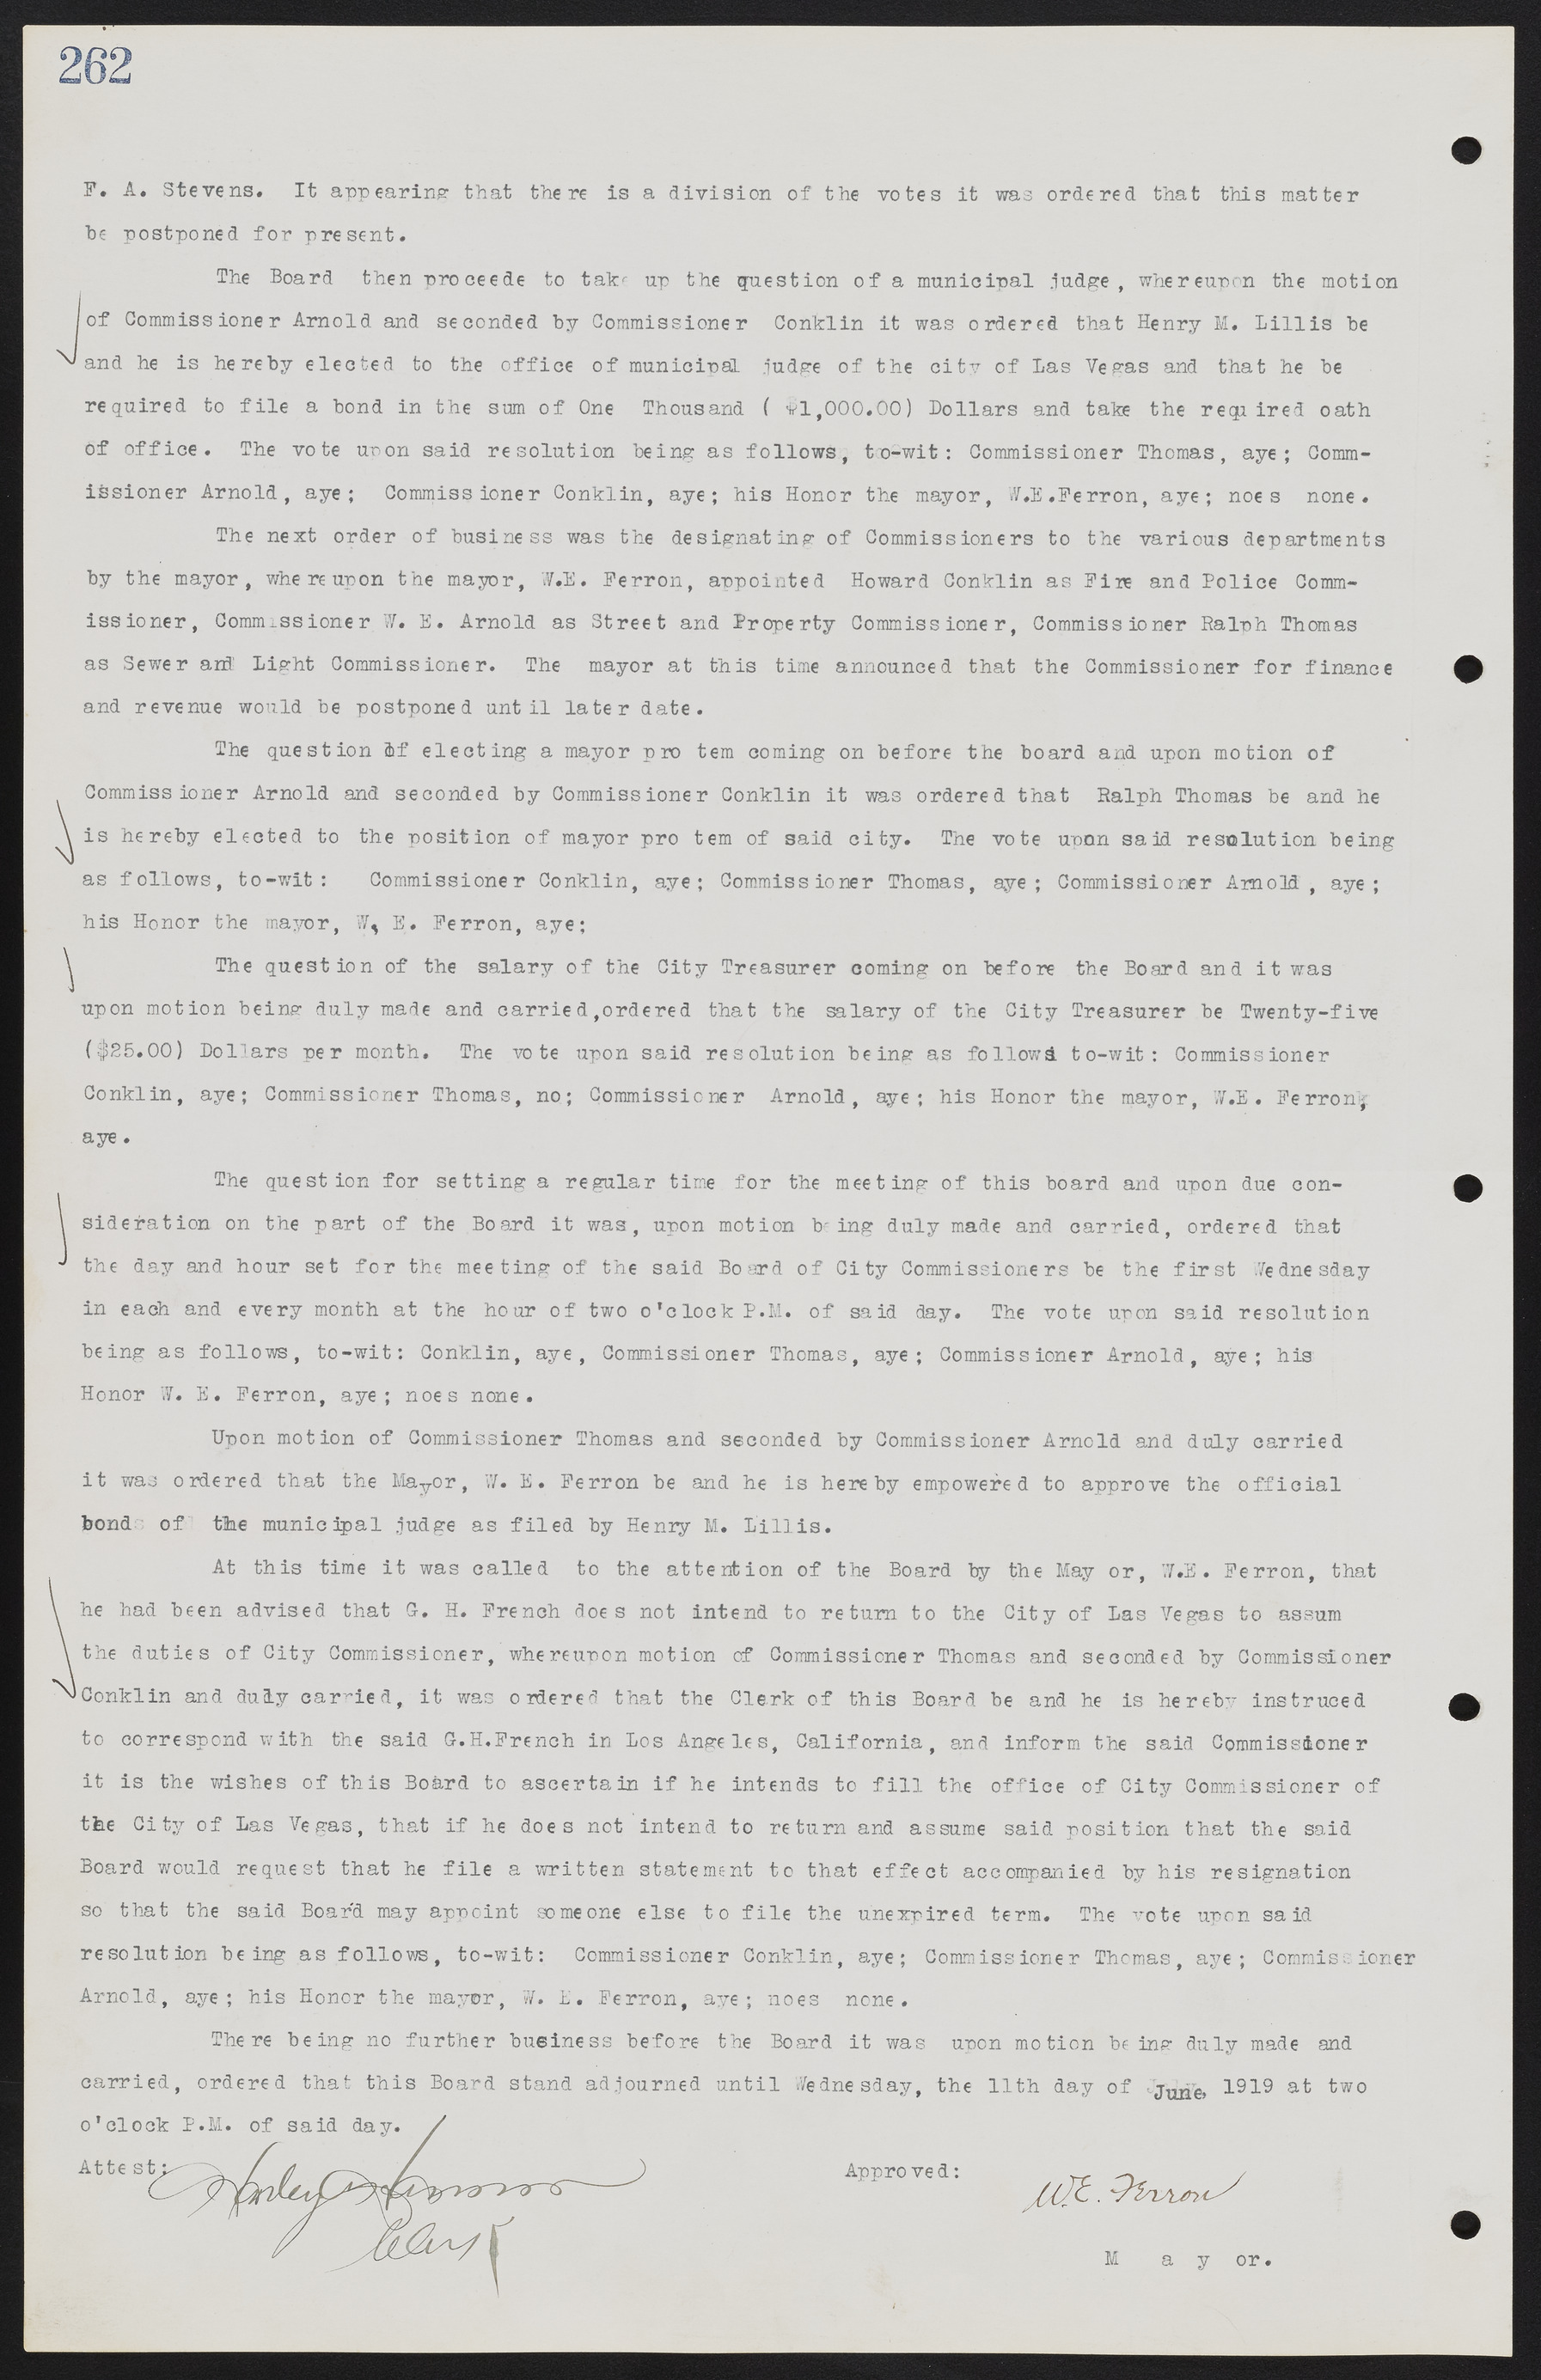 Las Vegas City Commission Minutes, June 22, 1911 to February 7, 1922, lvc000001-278